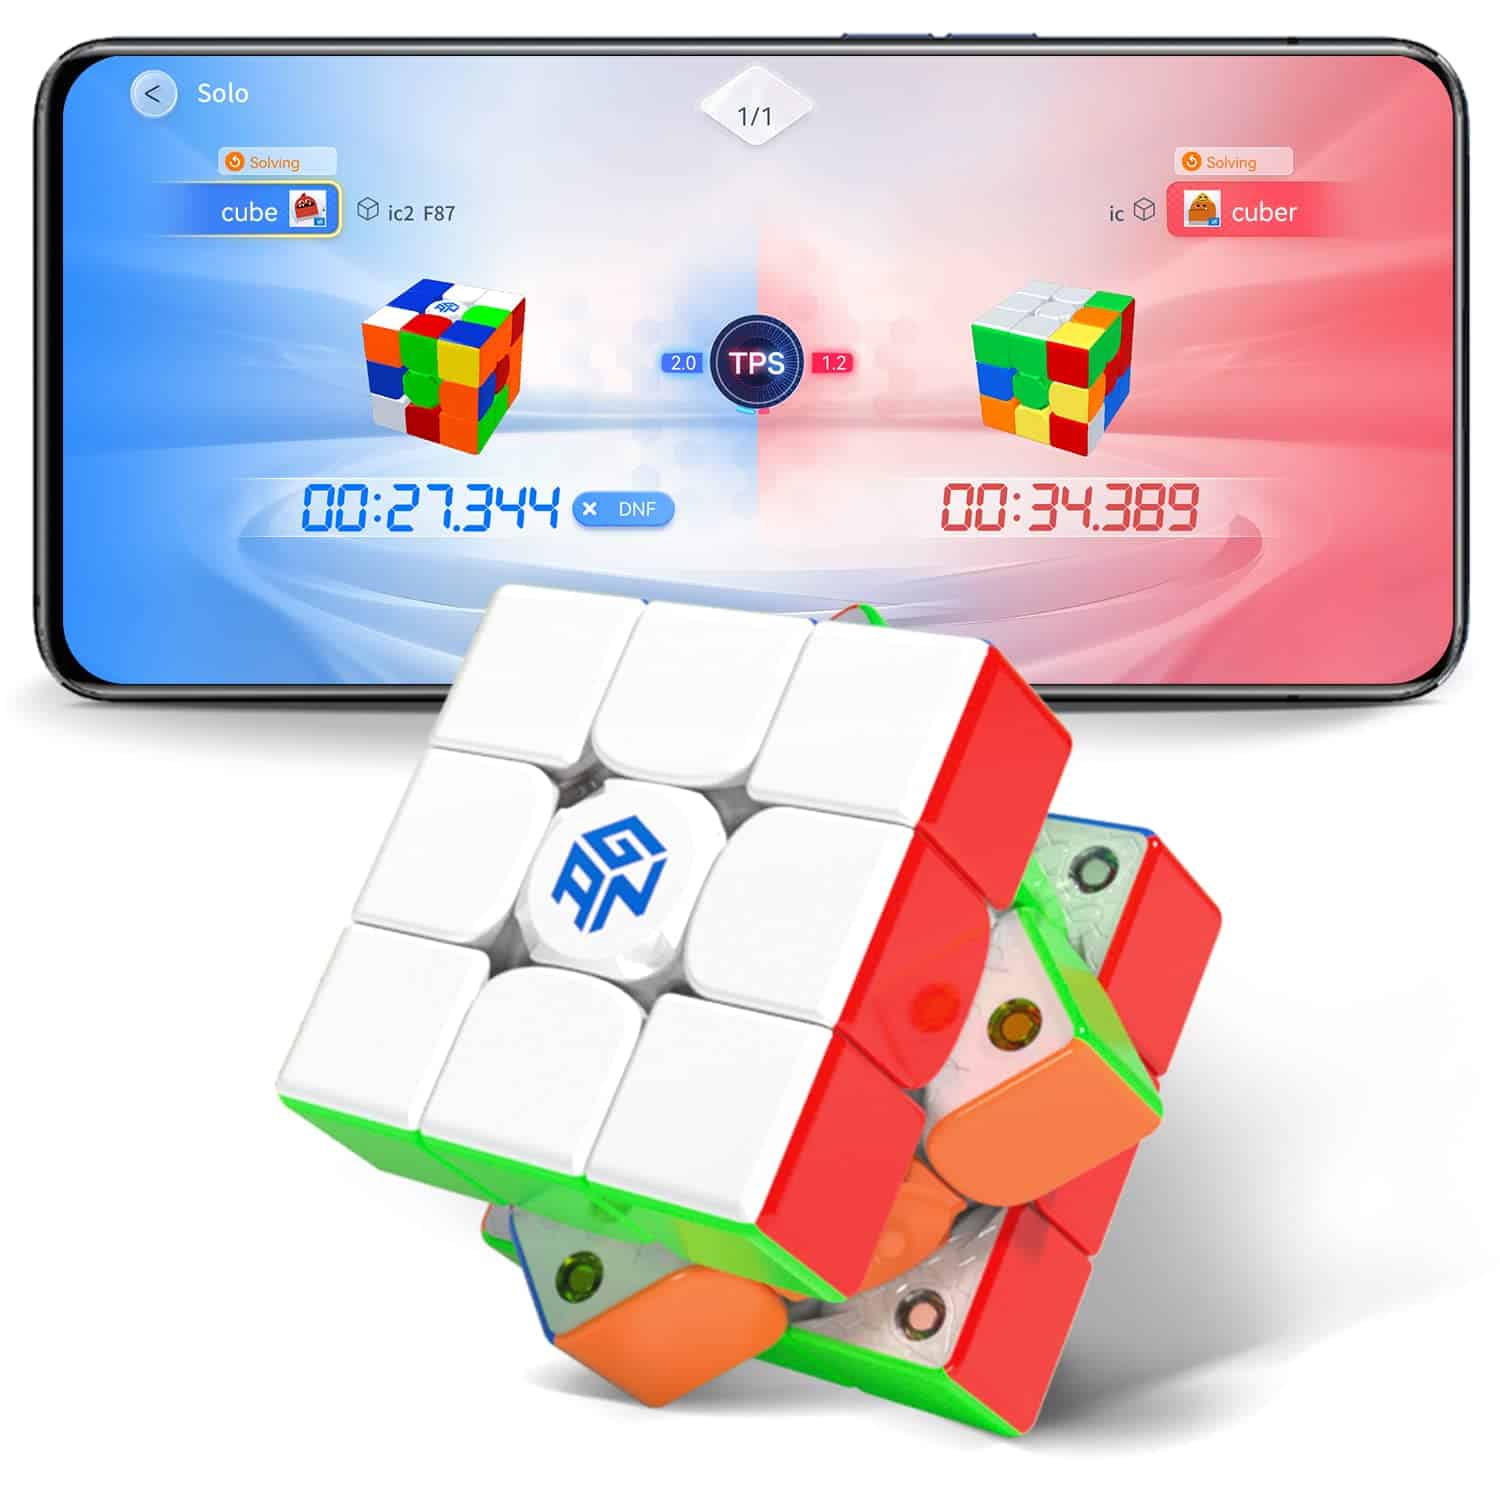  Cube-app-image